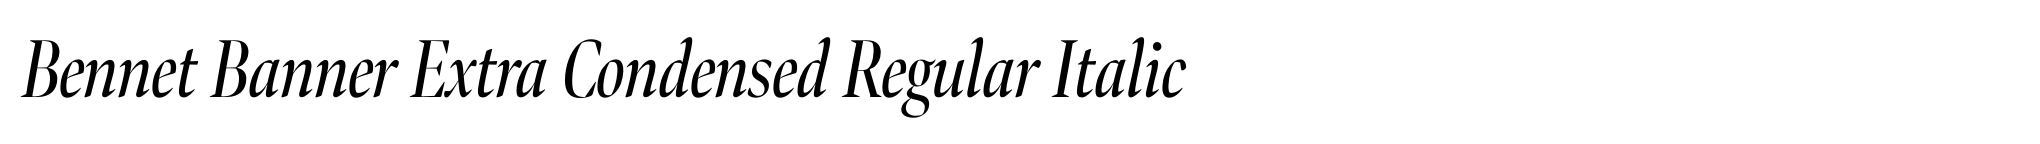 Bennet Banner Extra Condensed Regular Italic image